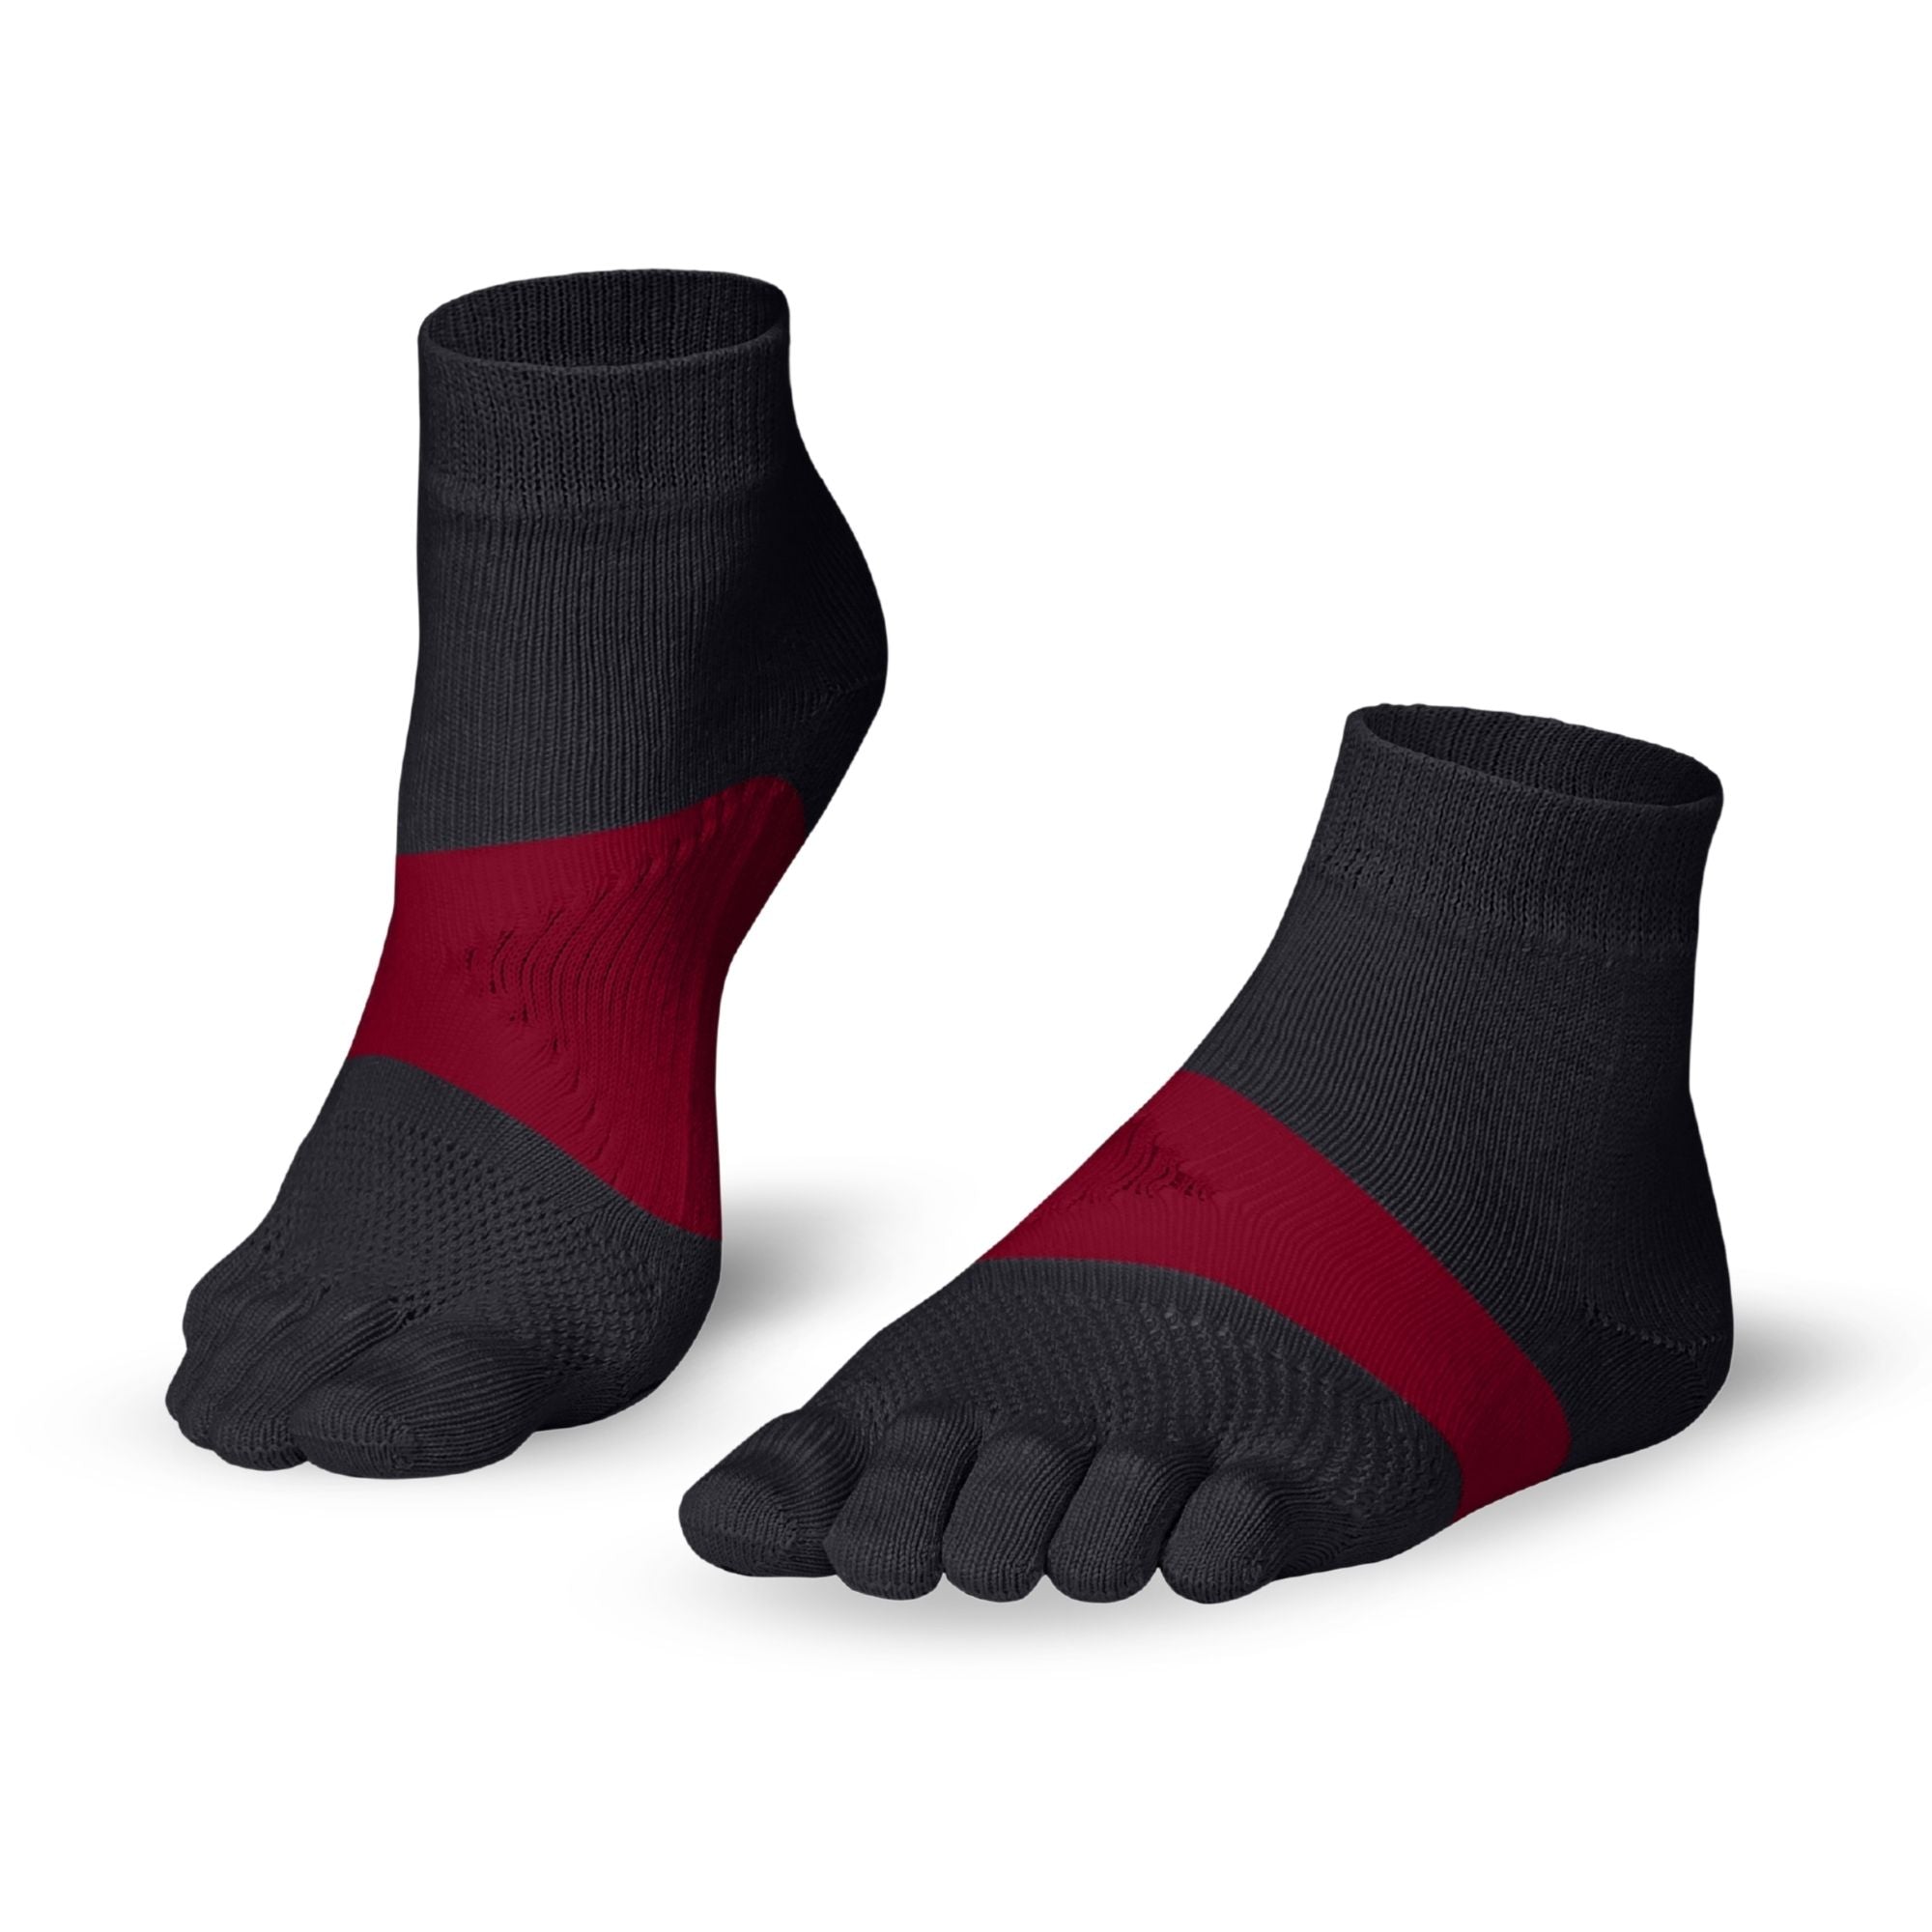 Knitido Plus® Umi, sneaker toe socks fitness, yoga, pilates